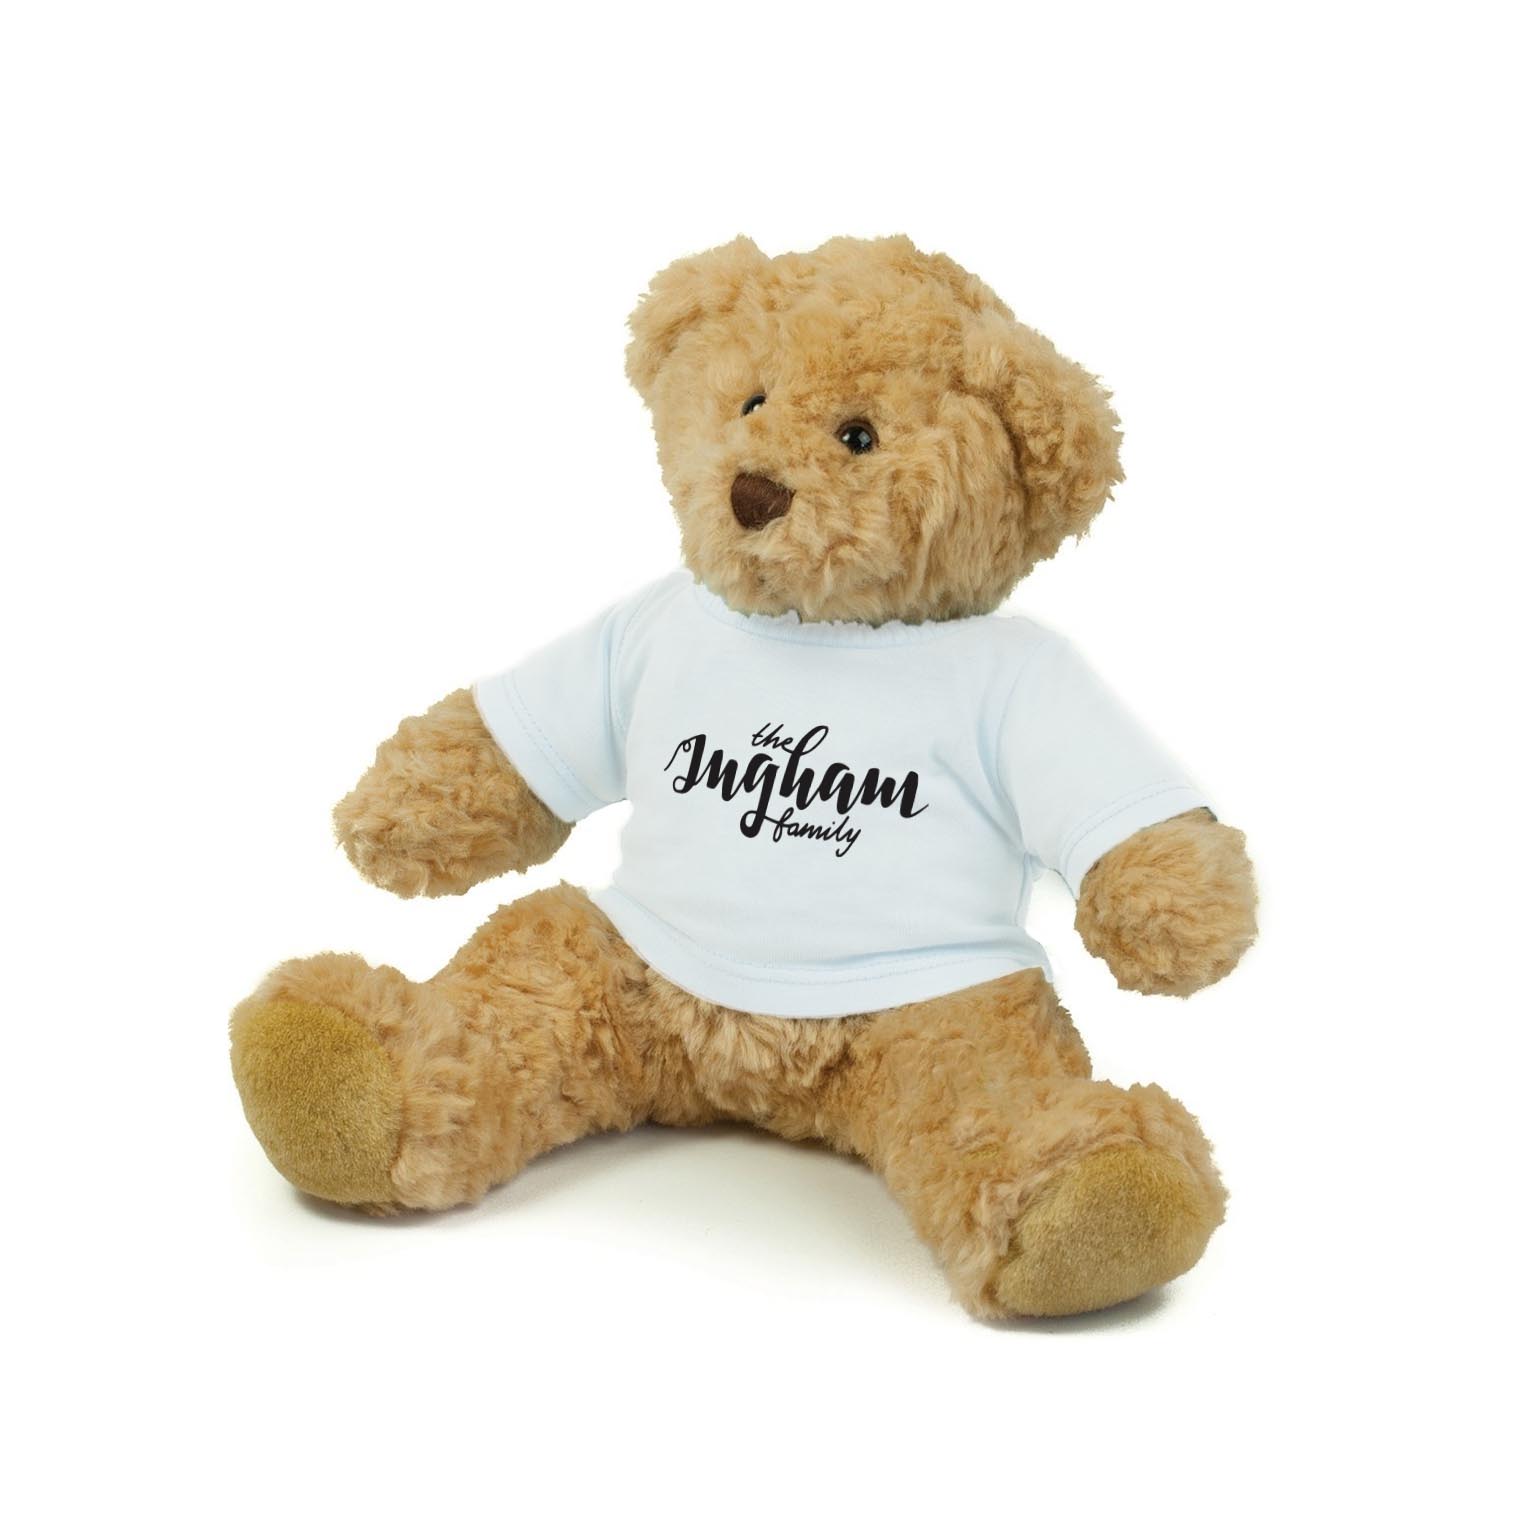 Luxury Teddy Bear - The Ingham Family